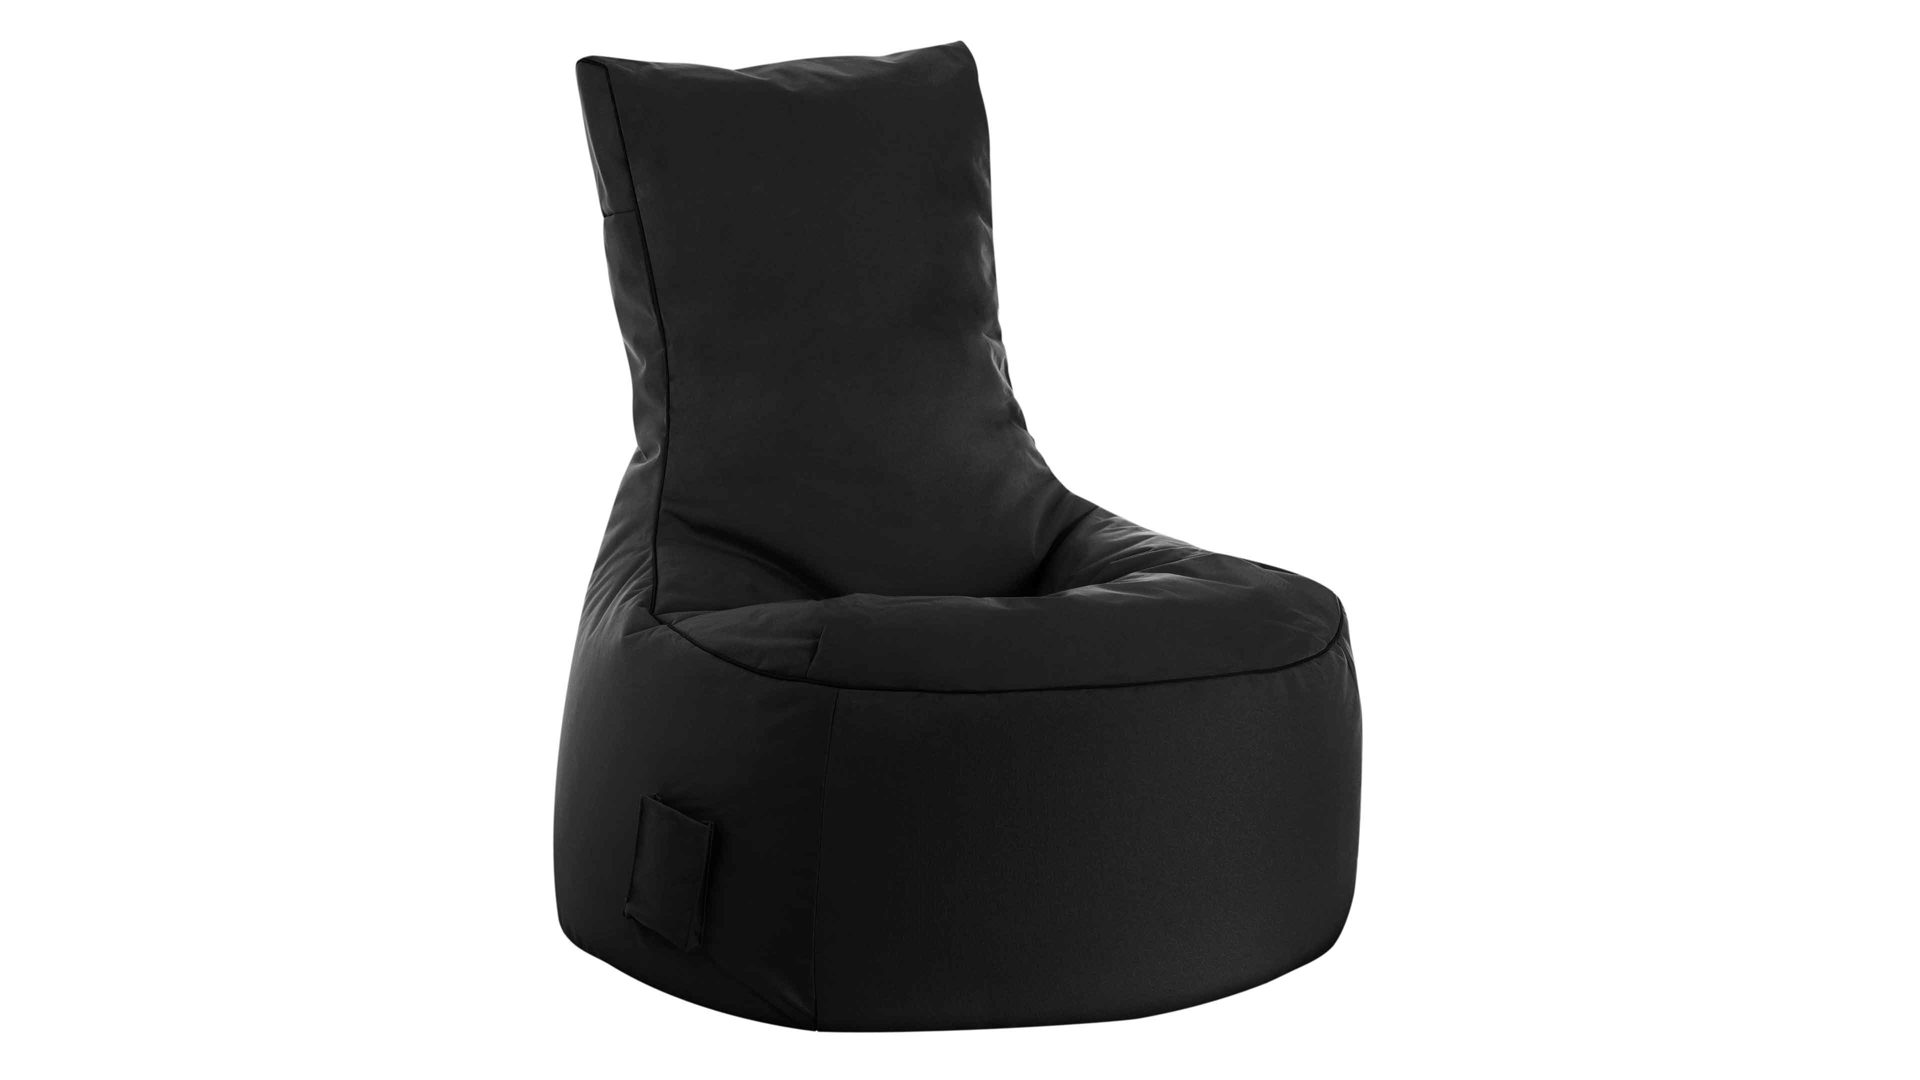 Sitzsack-Sessel Magma sitting point aus Kunstfaser in Schwarz SITTING POINT Sitzsack-Sessel swing scuba® schwarze Kunstfaser - ca. 95 x 90 x 65 cm